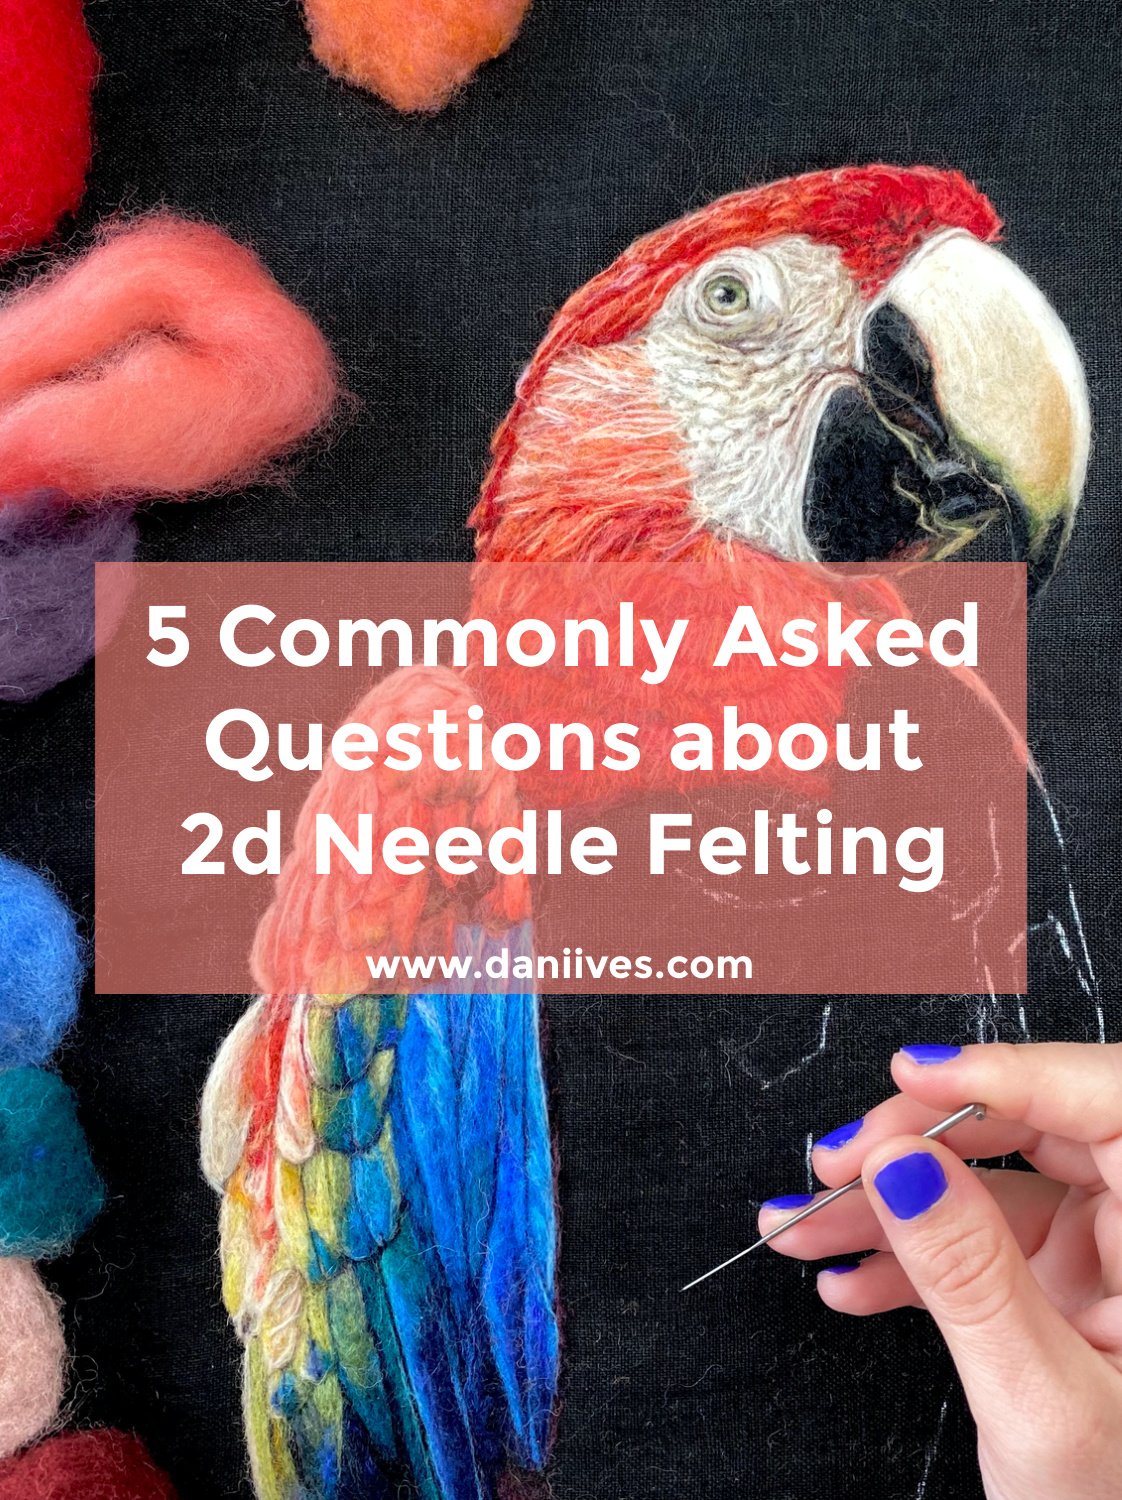 5 TOP NEEDLE FELTING KITS AND HOW TO START NEEDLE FELTING? - Ultimate Guide  To Needle Felting In The Felt Hub